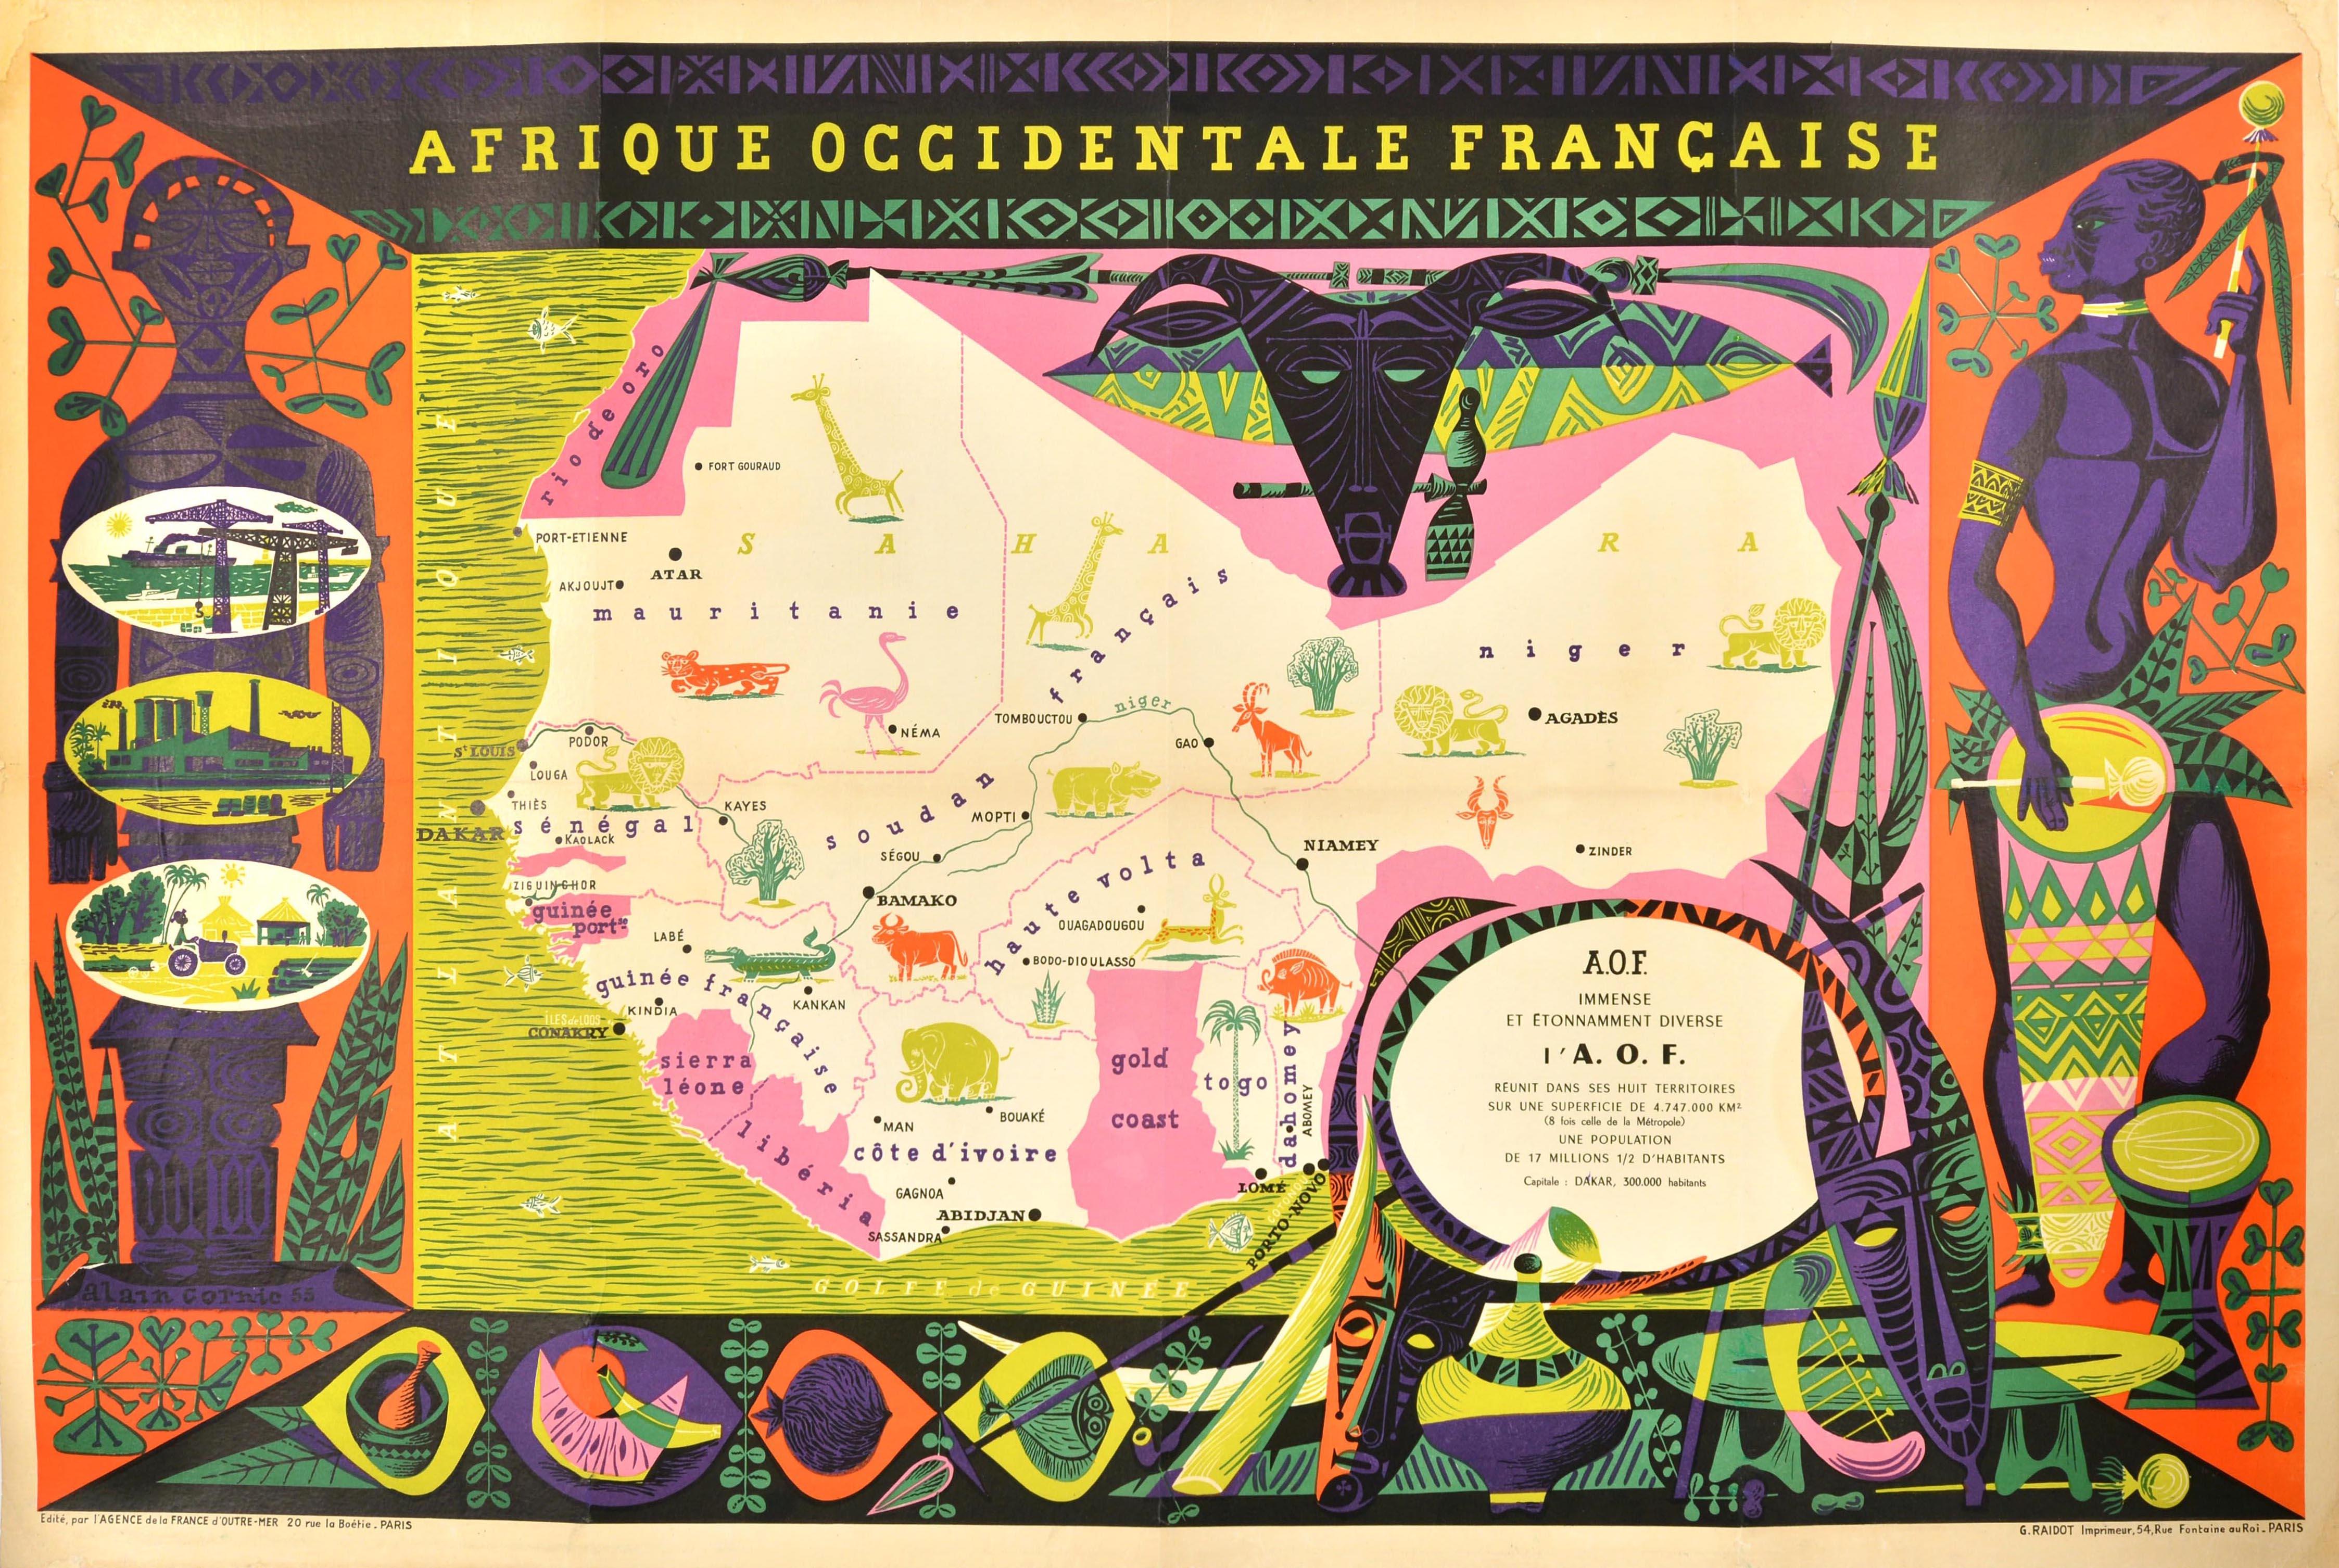 Alain Cornic Print - Original Vintage Poster French West Africa Map Afrique Occidentale Francaise Art